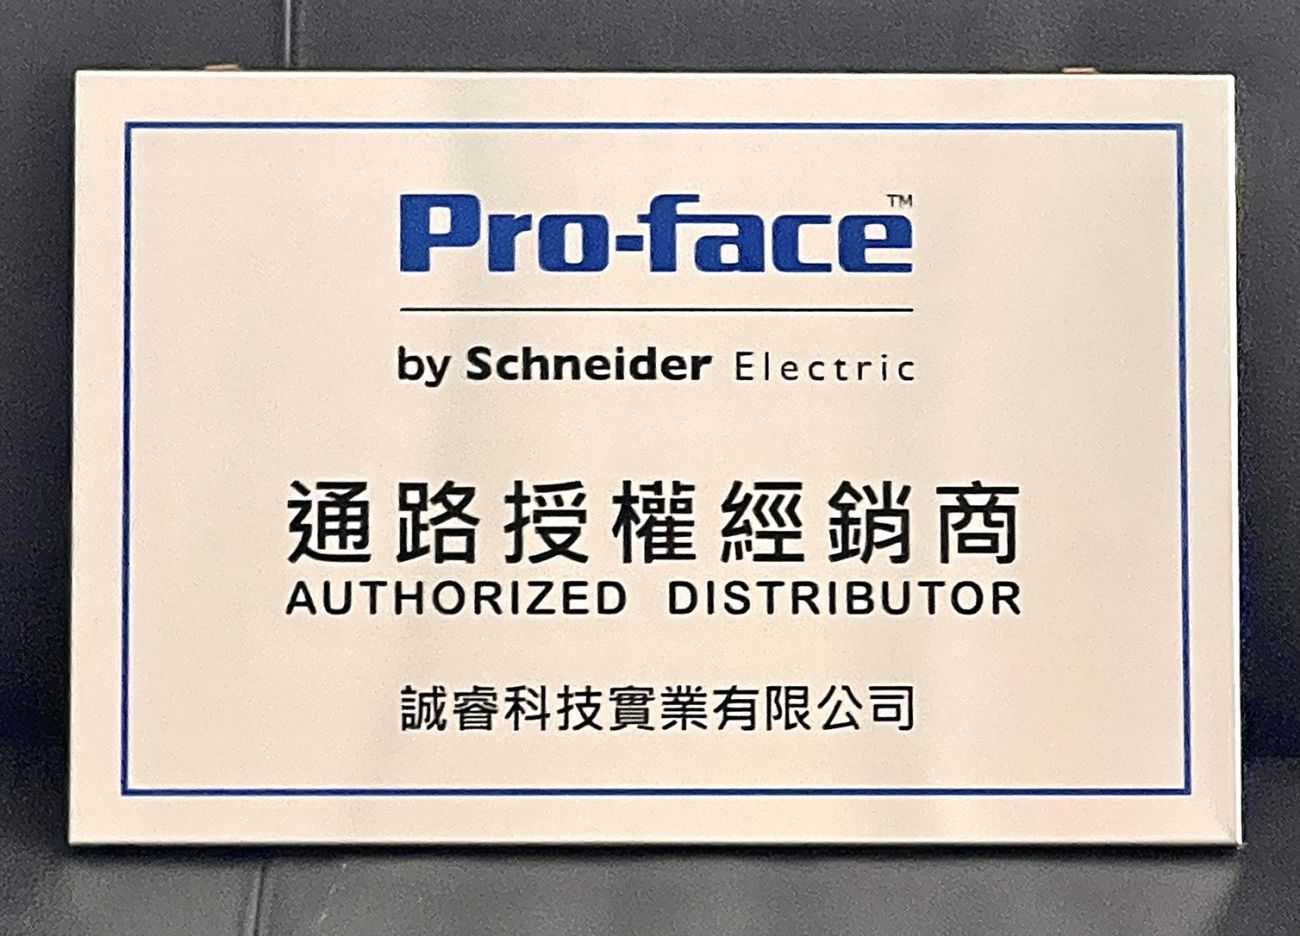 Pro-face 通路授權經銷商